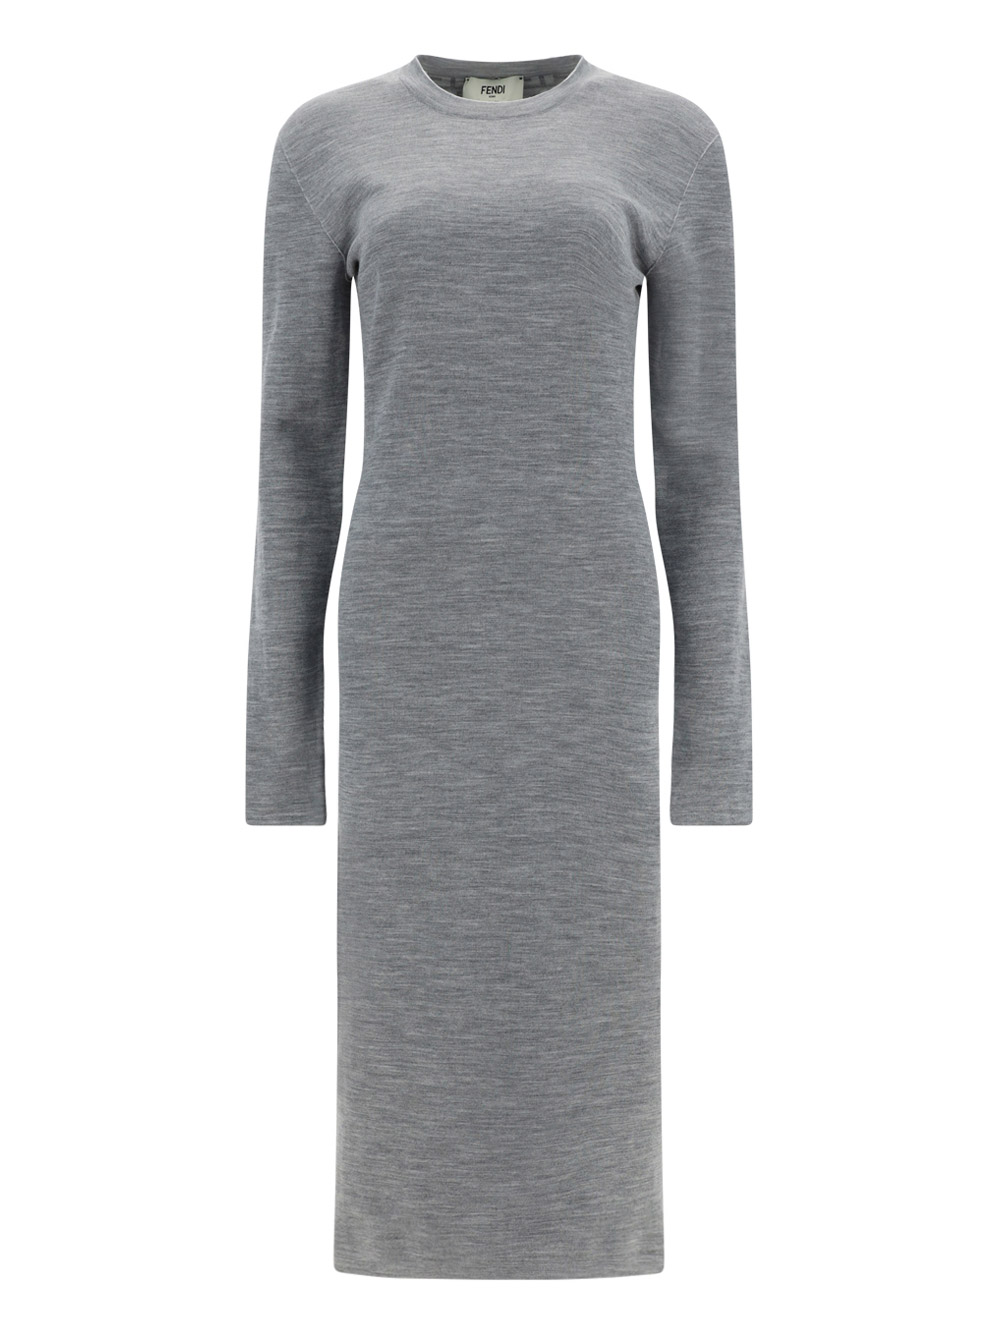 Fendi Dress In Grey Melange